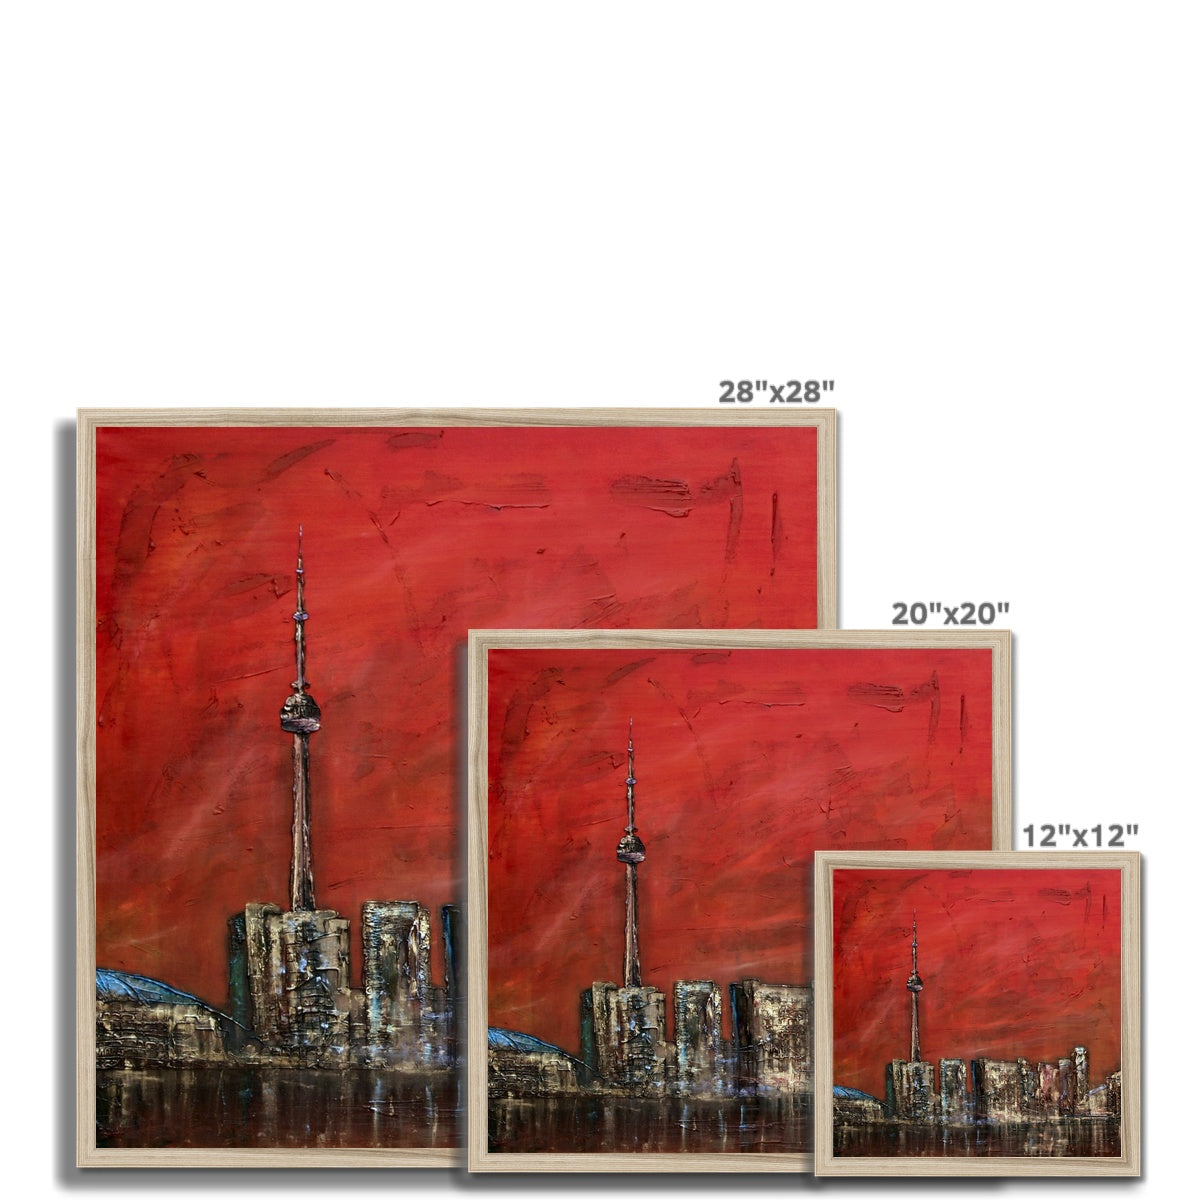 Toronto Sunset Painting | Framed Prints From Scotland-Framed Prints-World Art Gallery-Paintings, Prints, Homeware, Art Gifts From Scotland By Scottish Artist Kevin Hunter